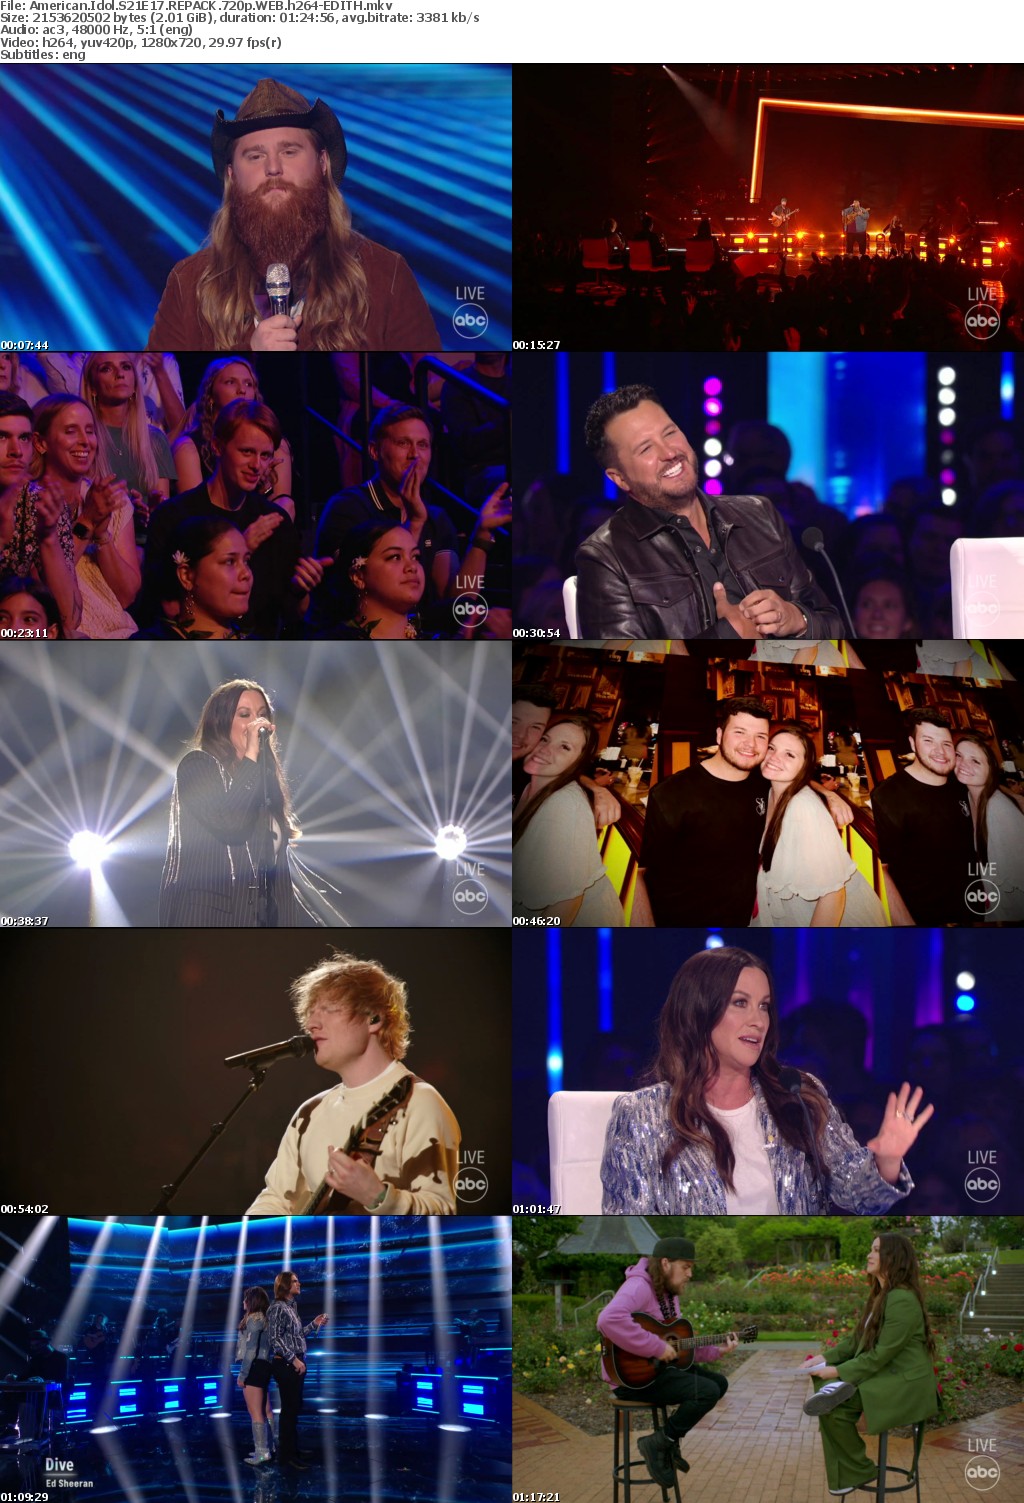 American Idol S21E17 REPACK 720p WEB h264-EDITH